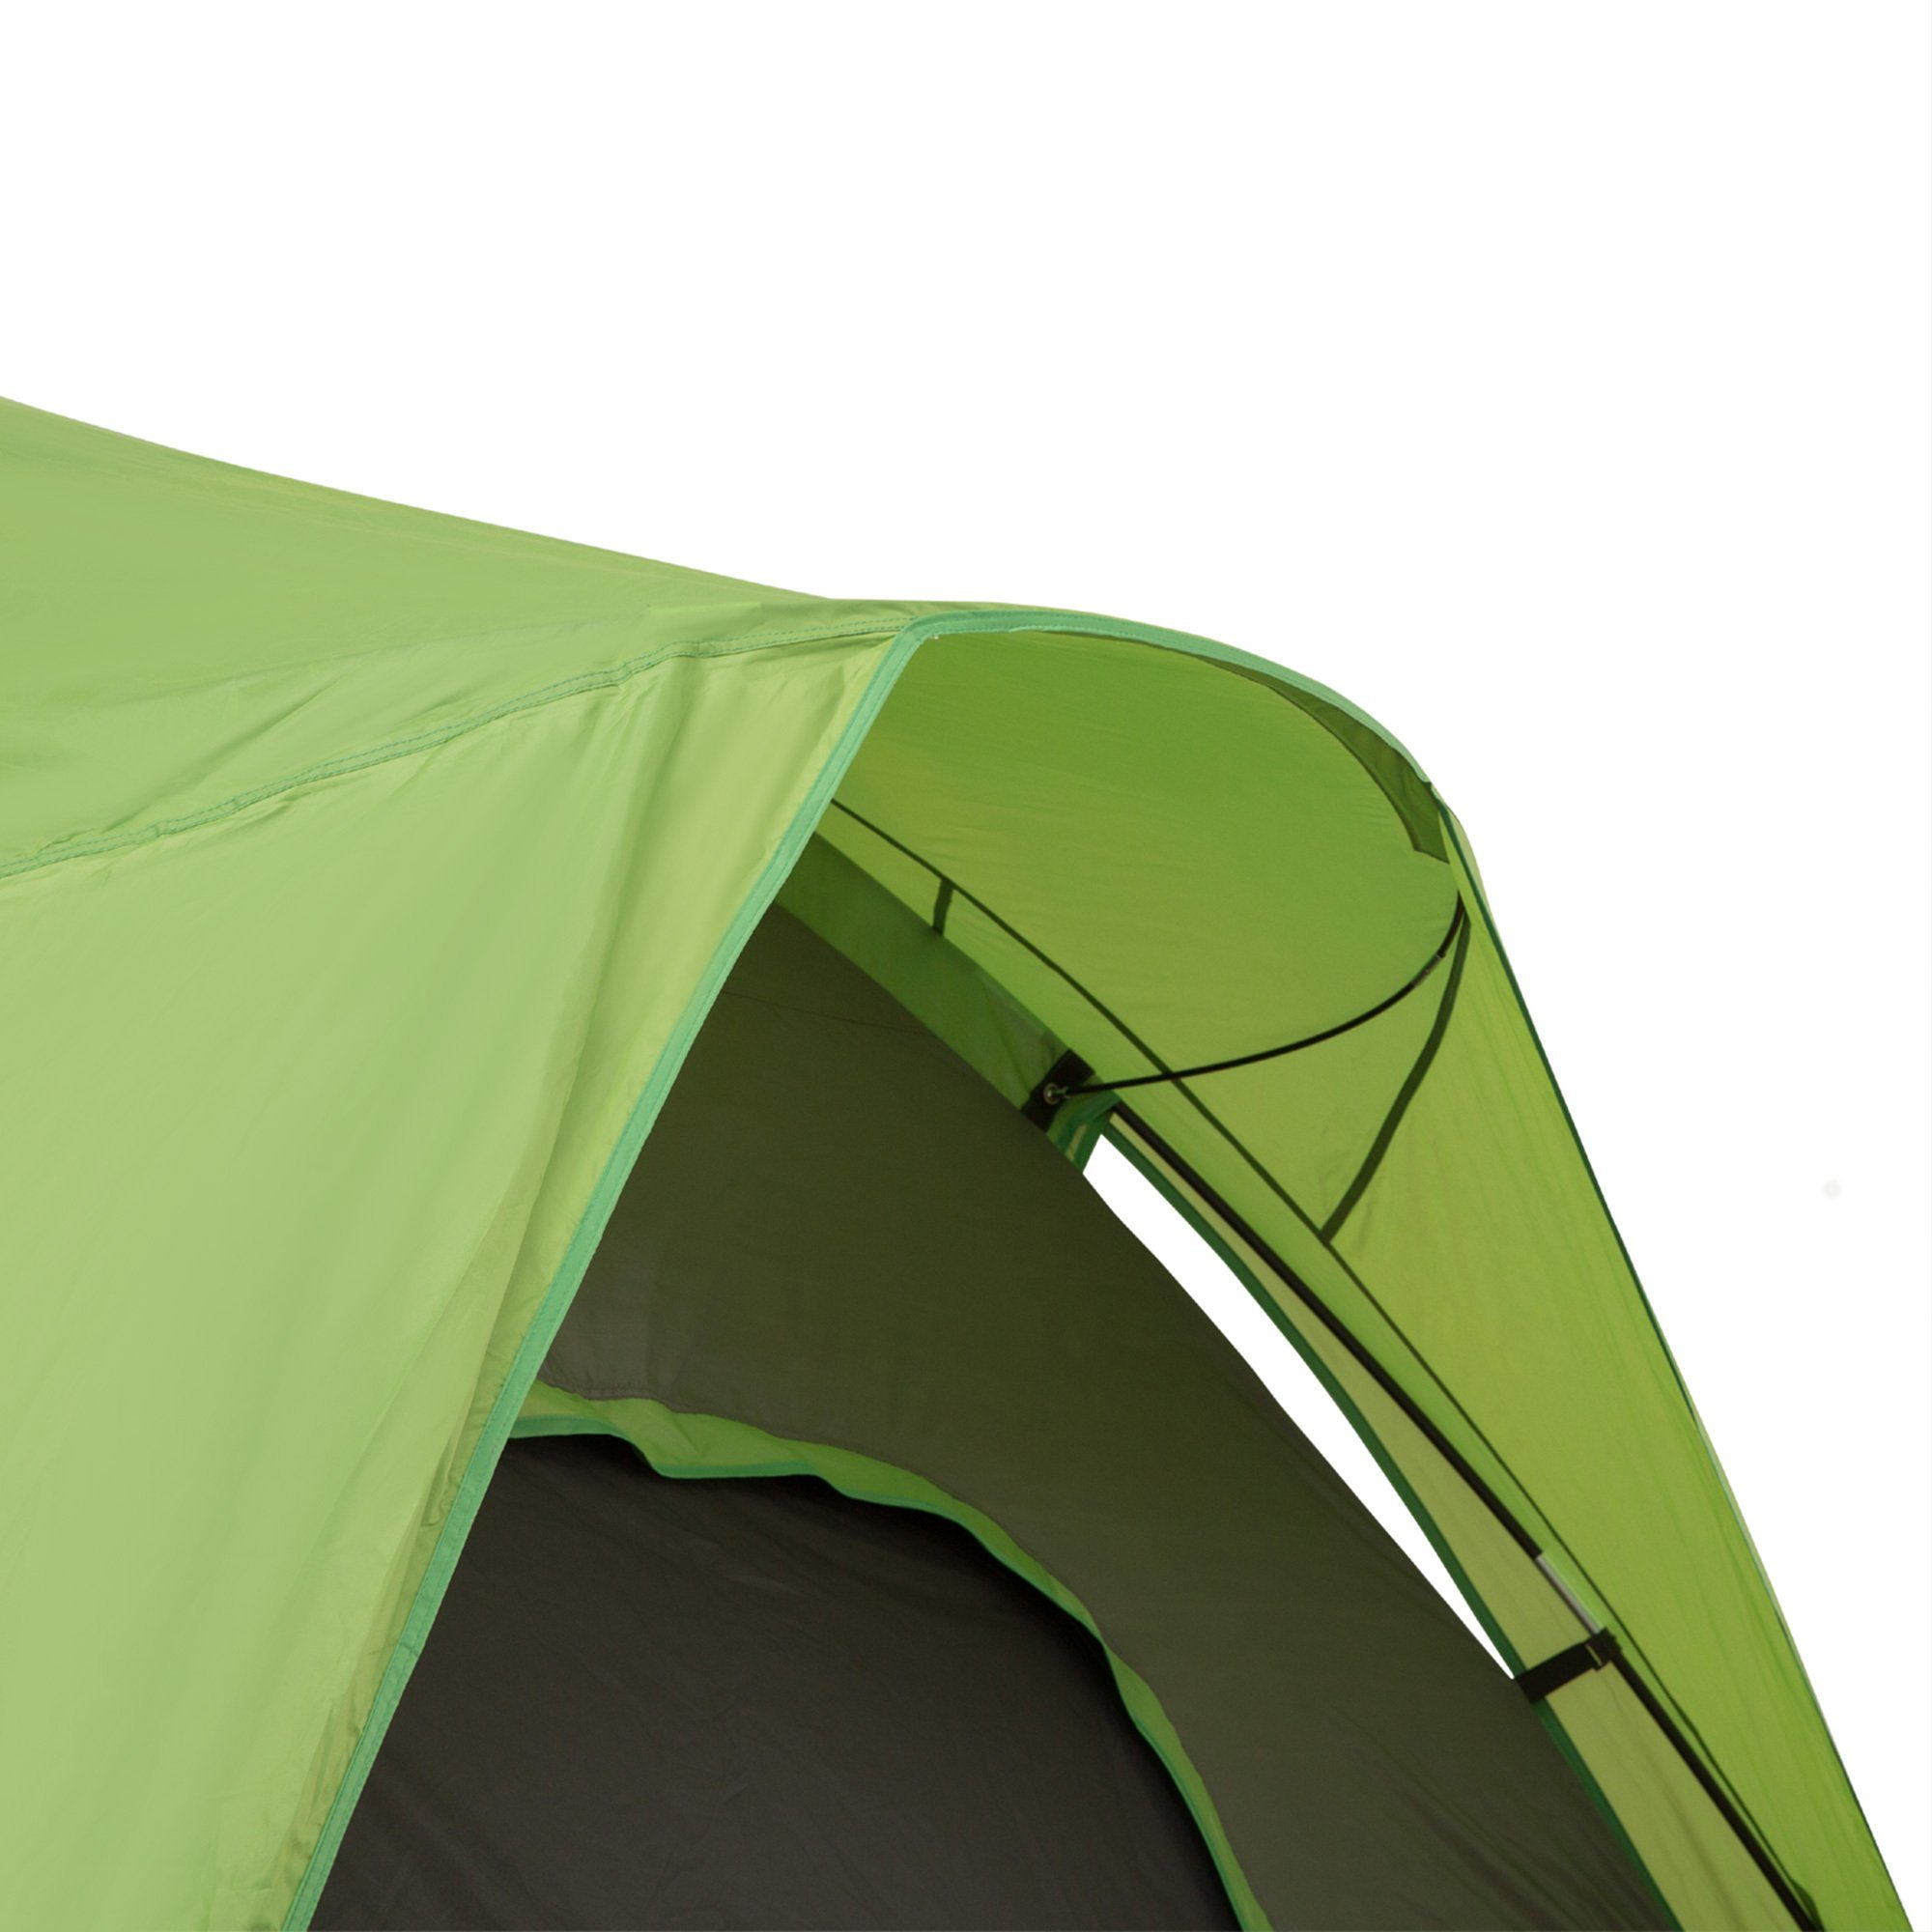 Outsunny Gruppenzelt Campingzelt für 4-5 Personen